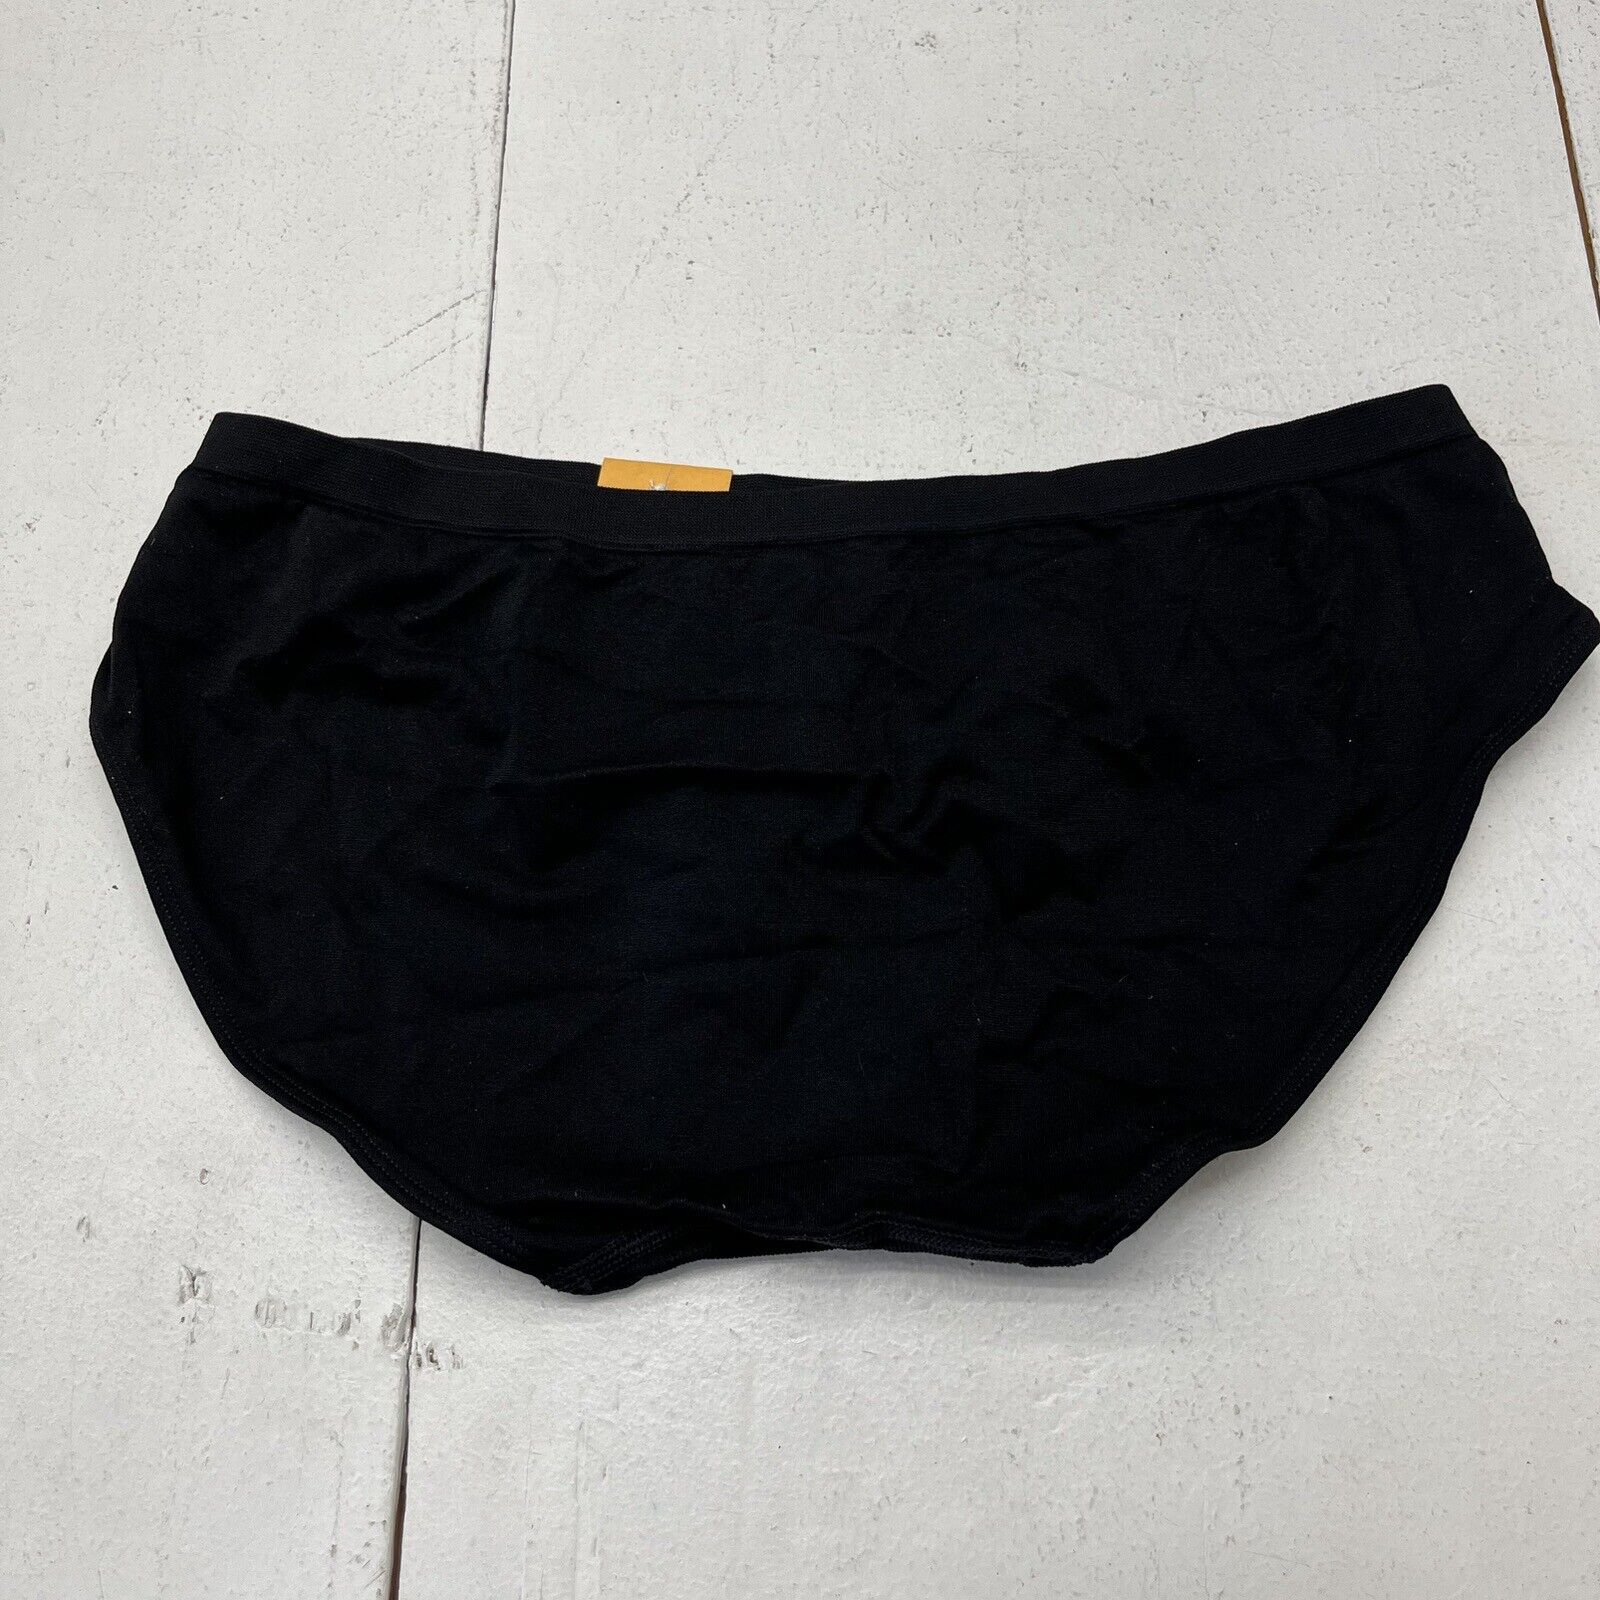 Auden Orange & Black Bikini Underwear Women’s Size Medium (8-10) NEW